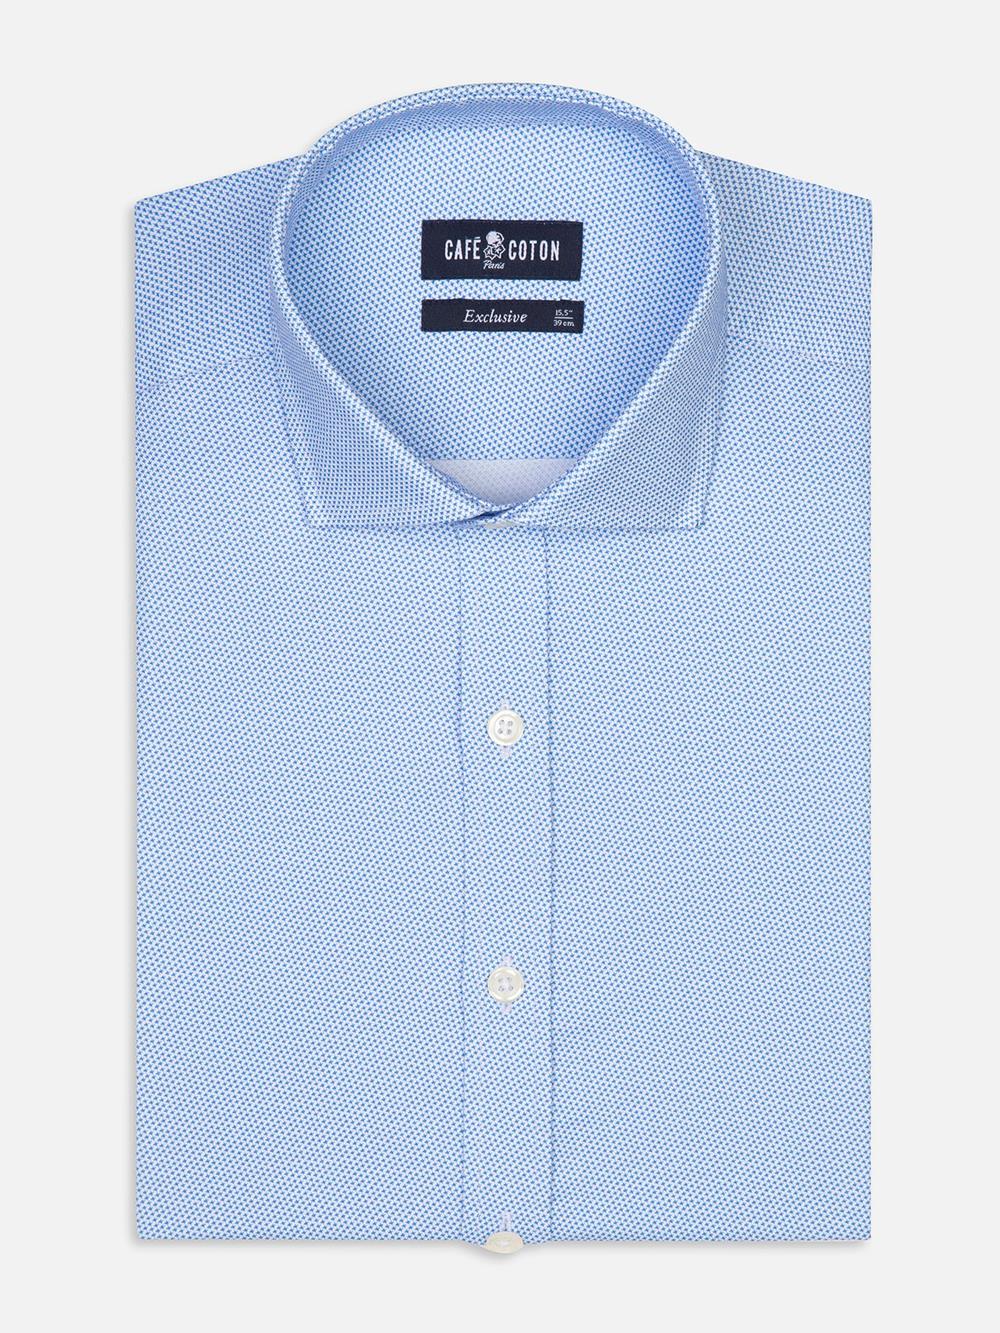 Finn shirt with sky blue print pattern